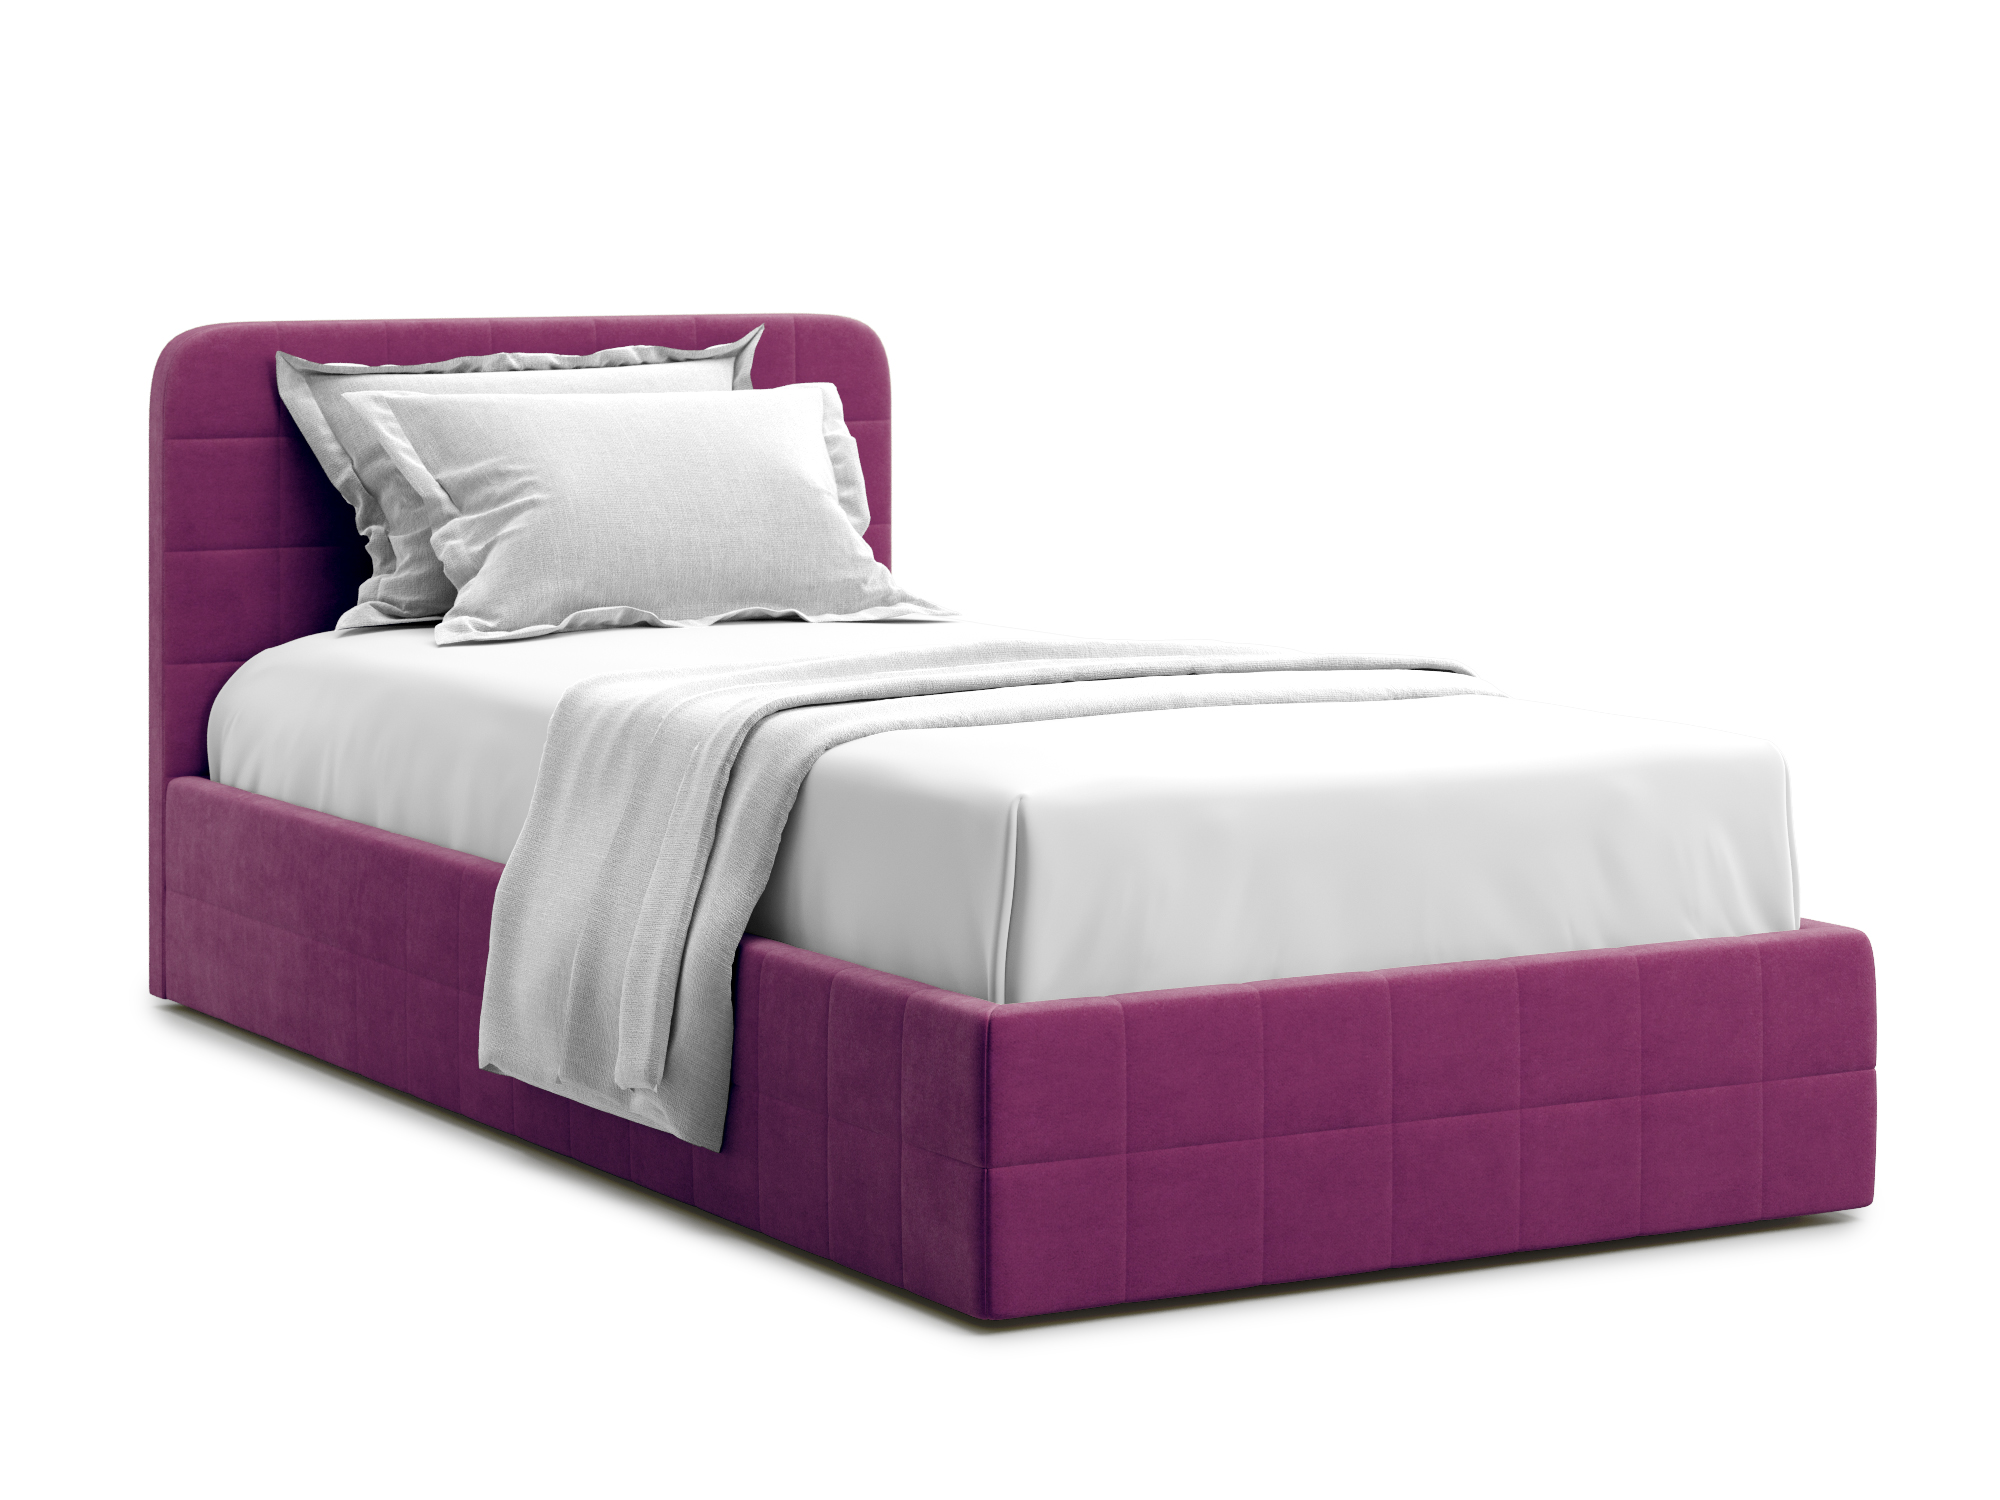 Кровать Adda 120 Velutto 15 Фиолетовый, Массив, ДСП кровать adda 120 velutto 32 серый массив дсп